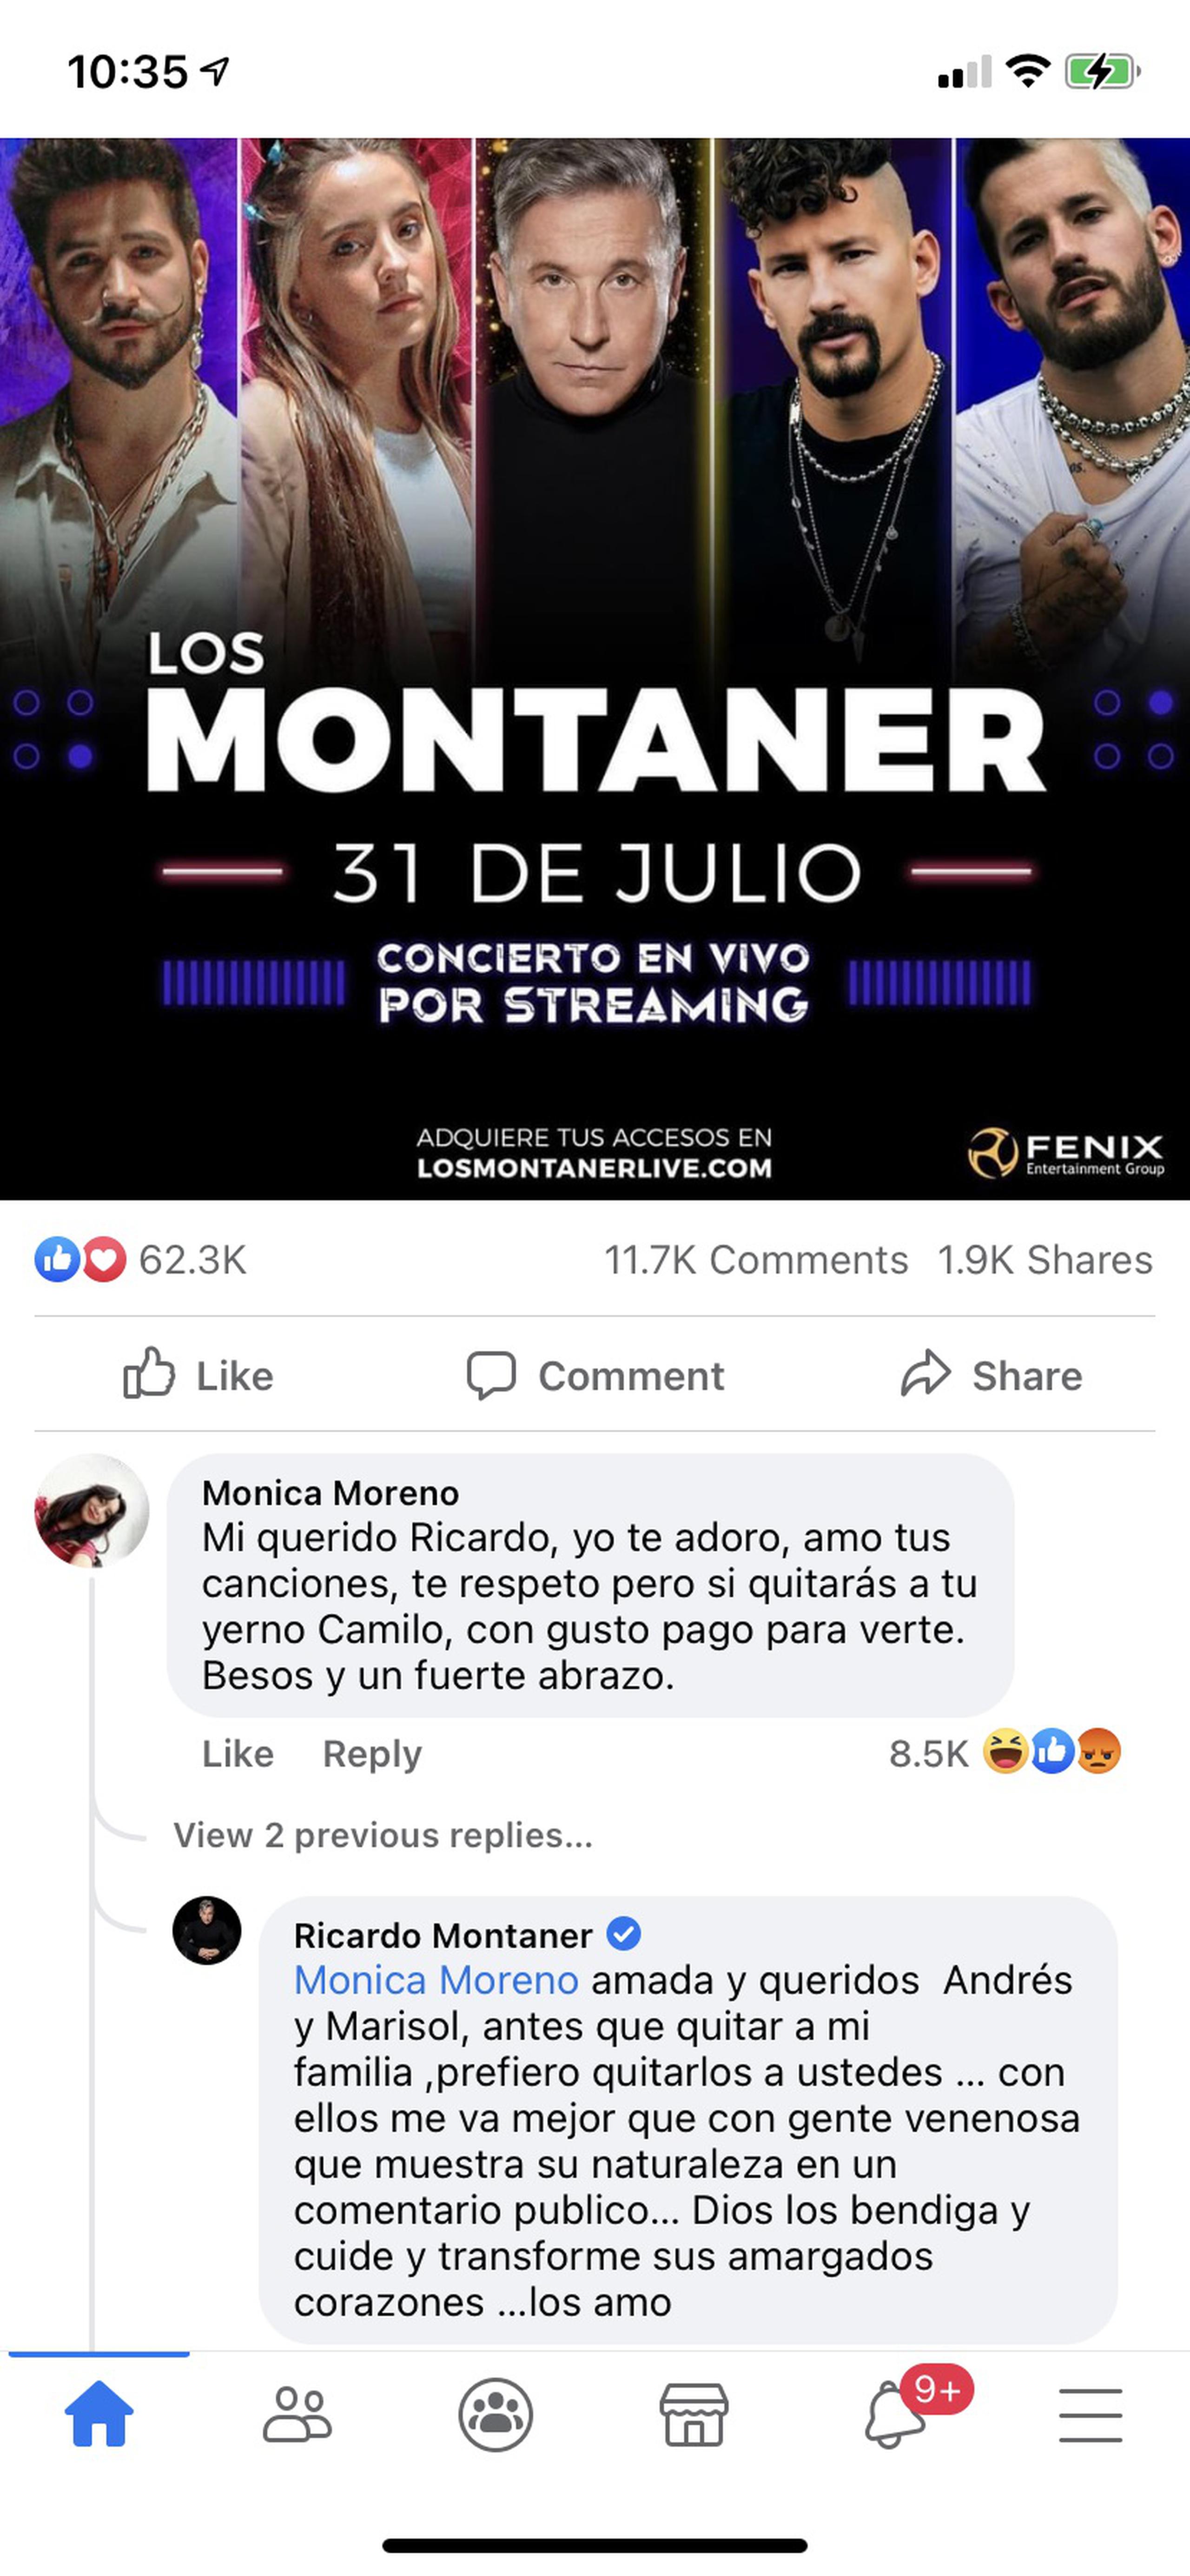 Así respondió Ricardo Montaner a varios fanáticos.